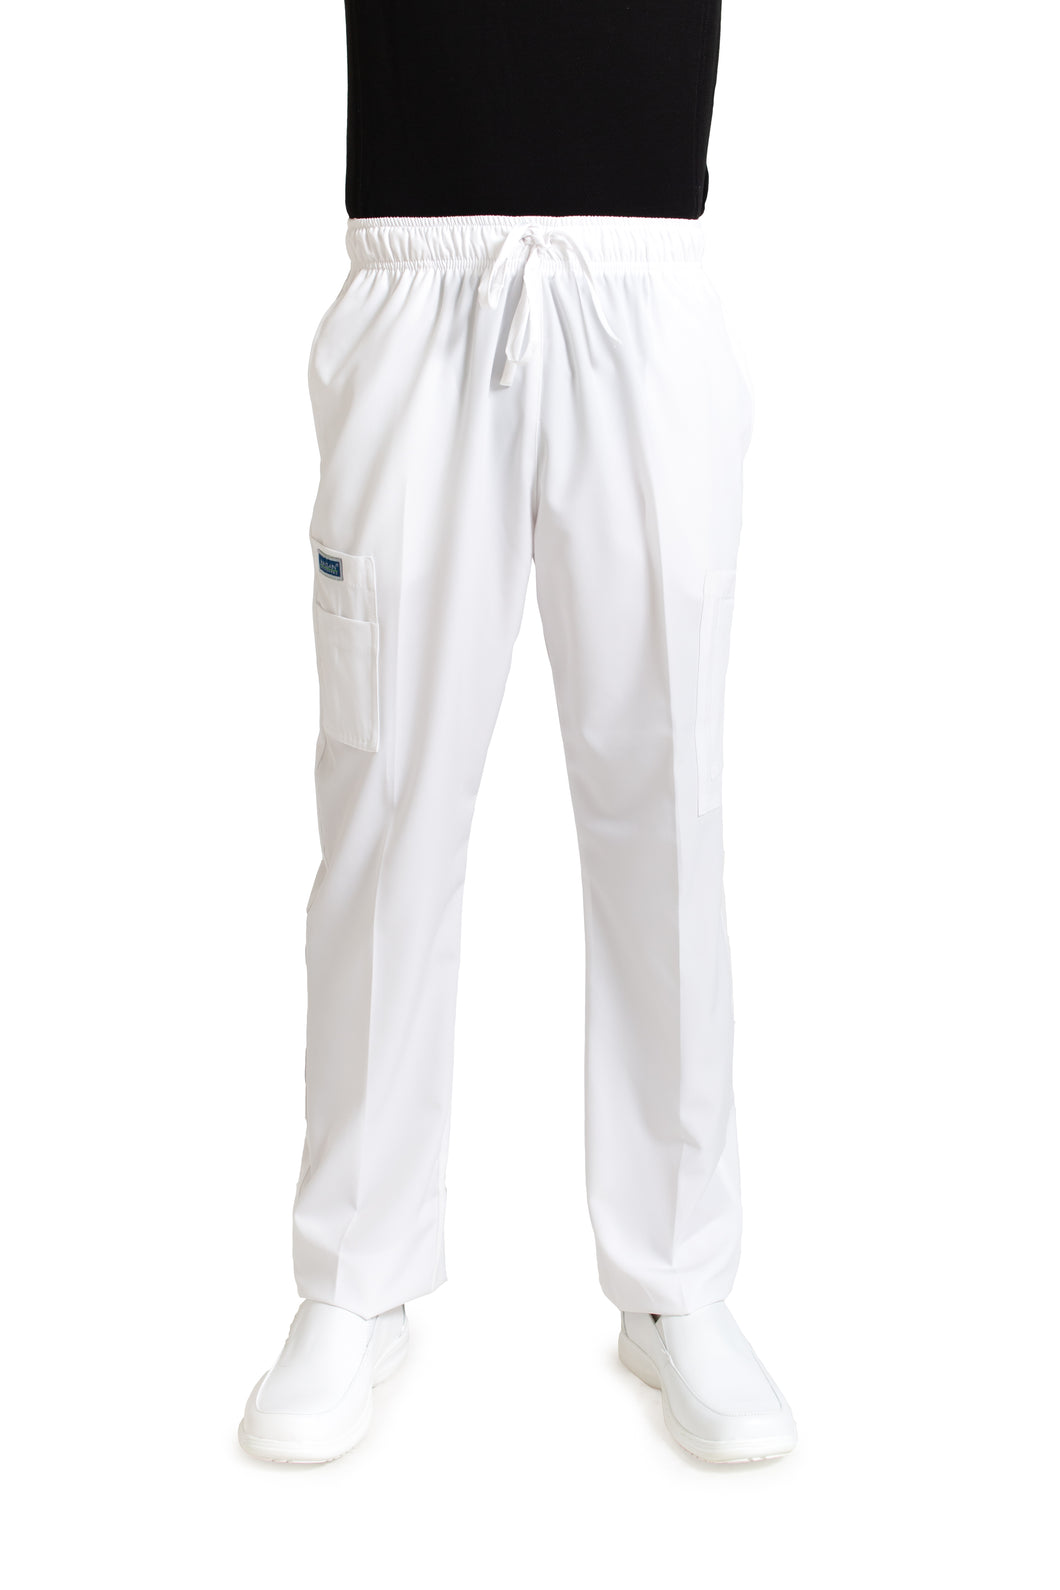 Pantalón Pant EA-02P REPELENTE A FLUIDOS-Color BLANCO HOMBRE-HASSAN Uniformes